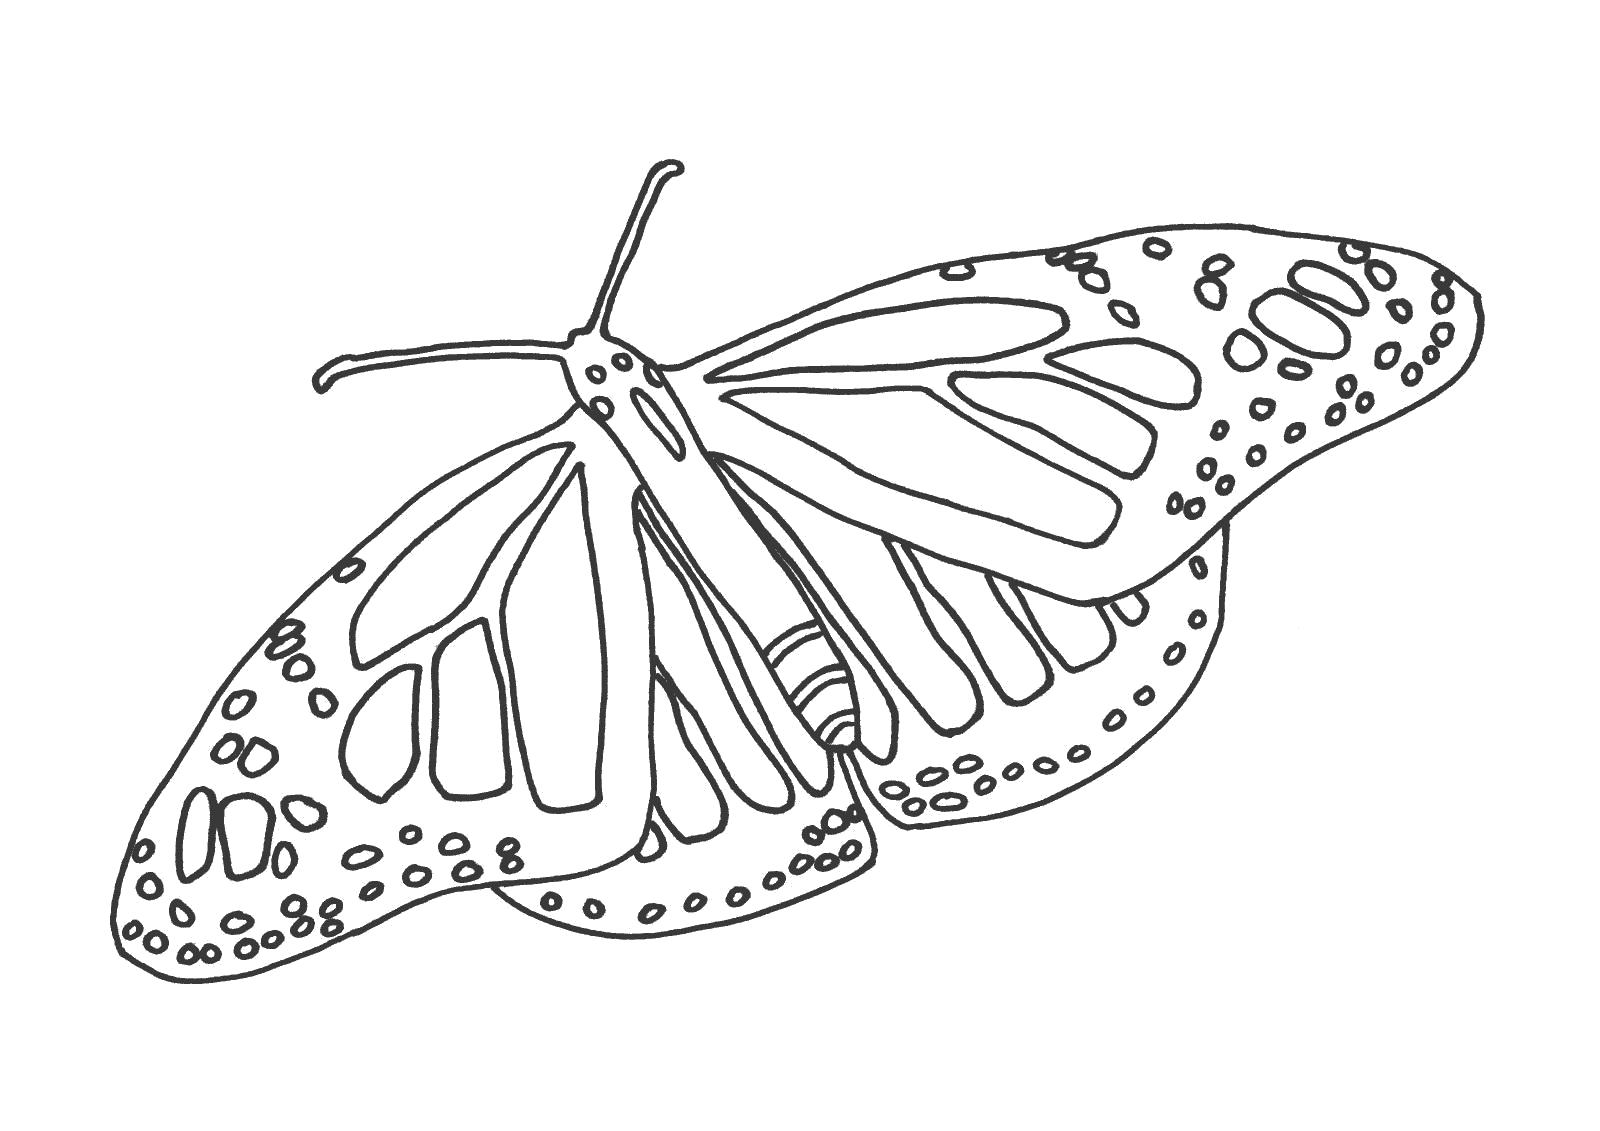 Раскраска насекомое ребенку 4 года. Раскраска "бабочки". Бабочка для раскрашивания. Бабочка рисунок раскраска. Рисунок бабочки для раскрашивания.